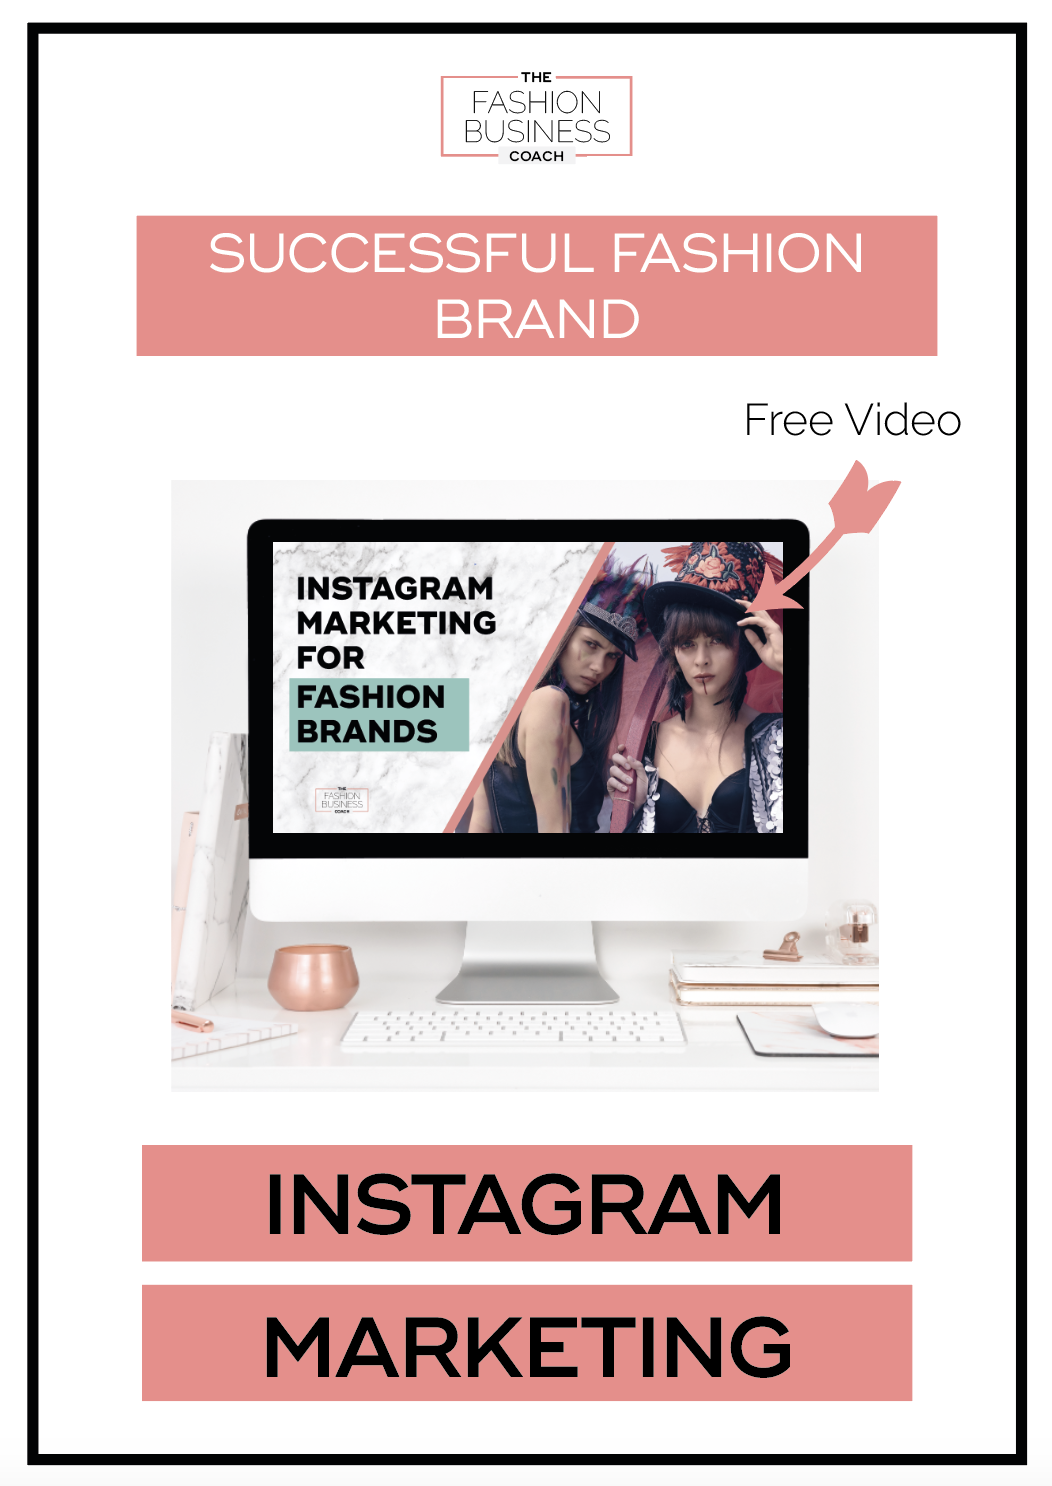 Instagram Marketing – Successful Fashion Brand 4.png